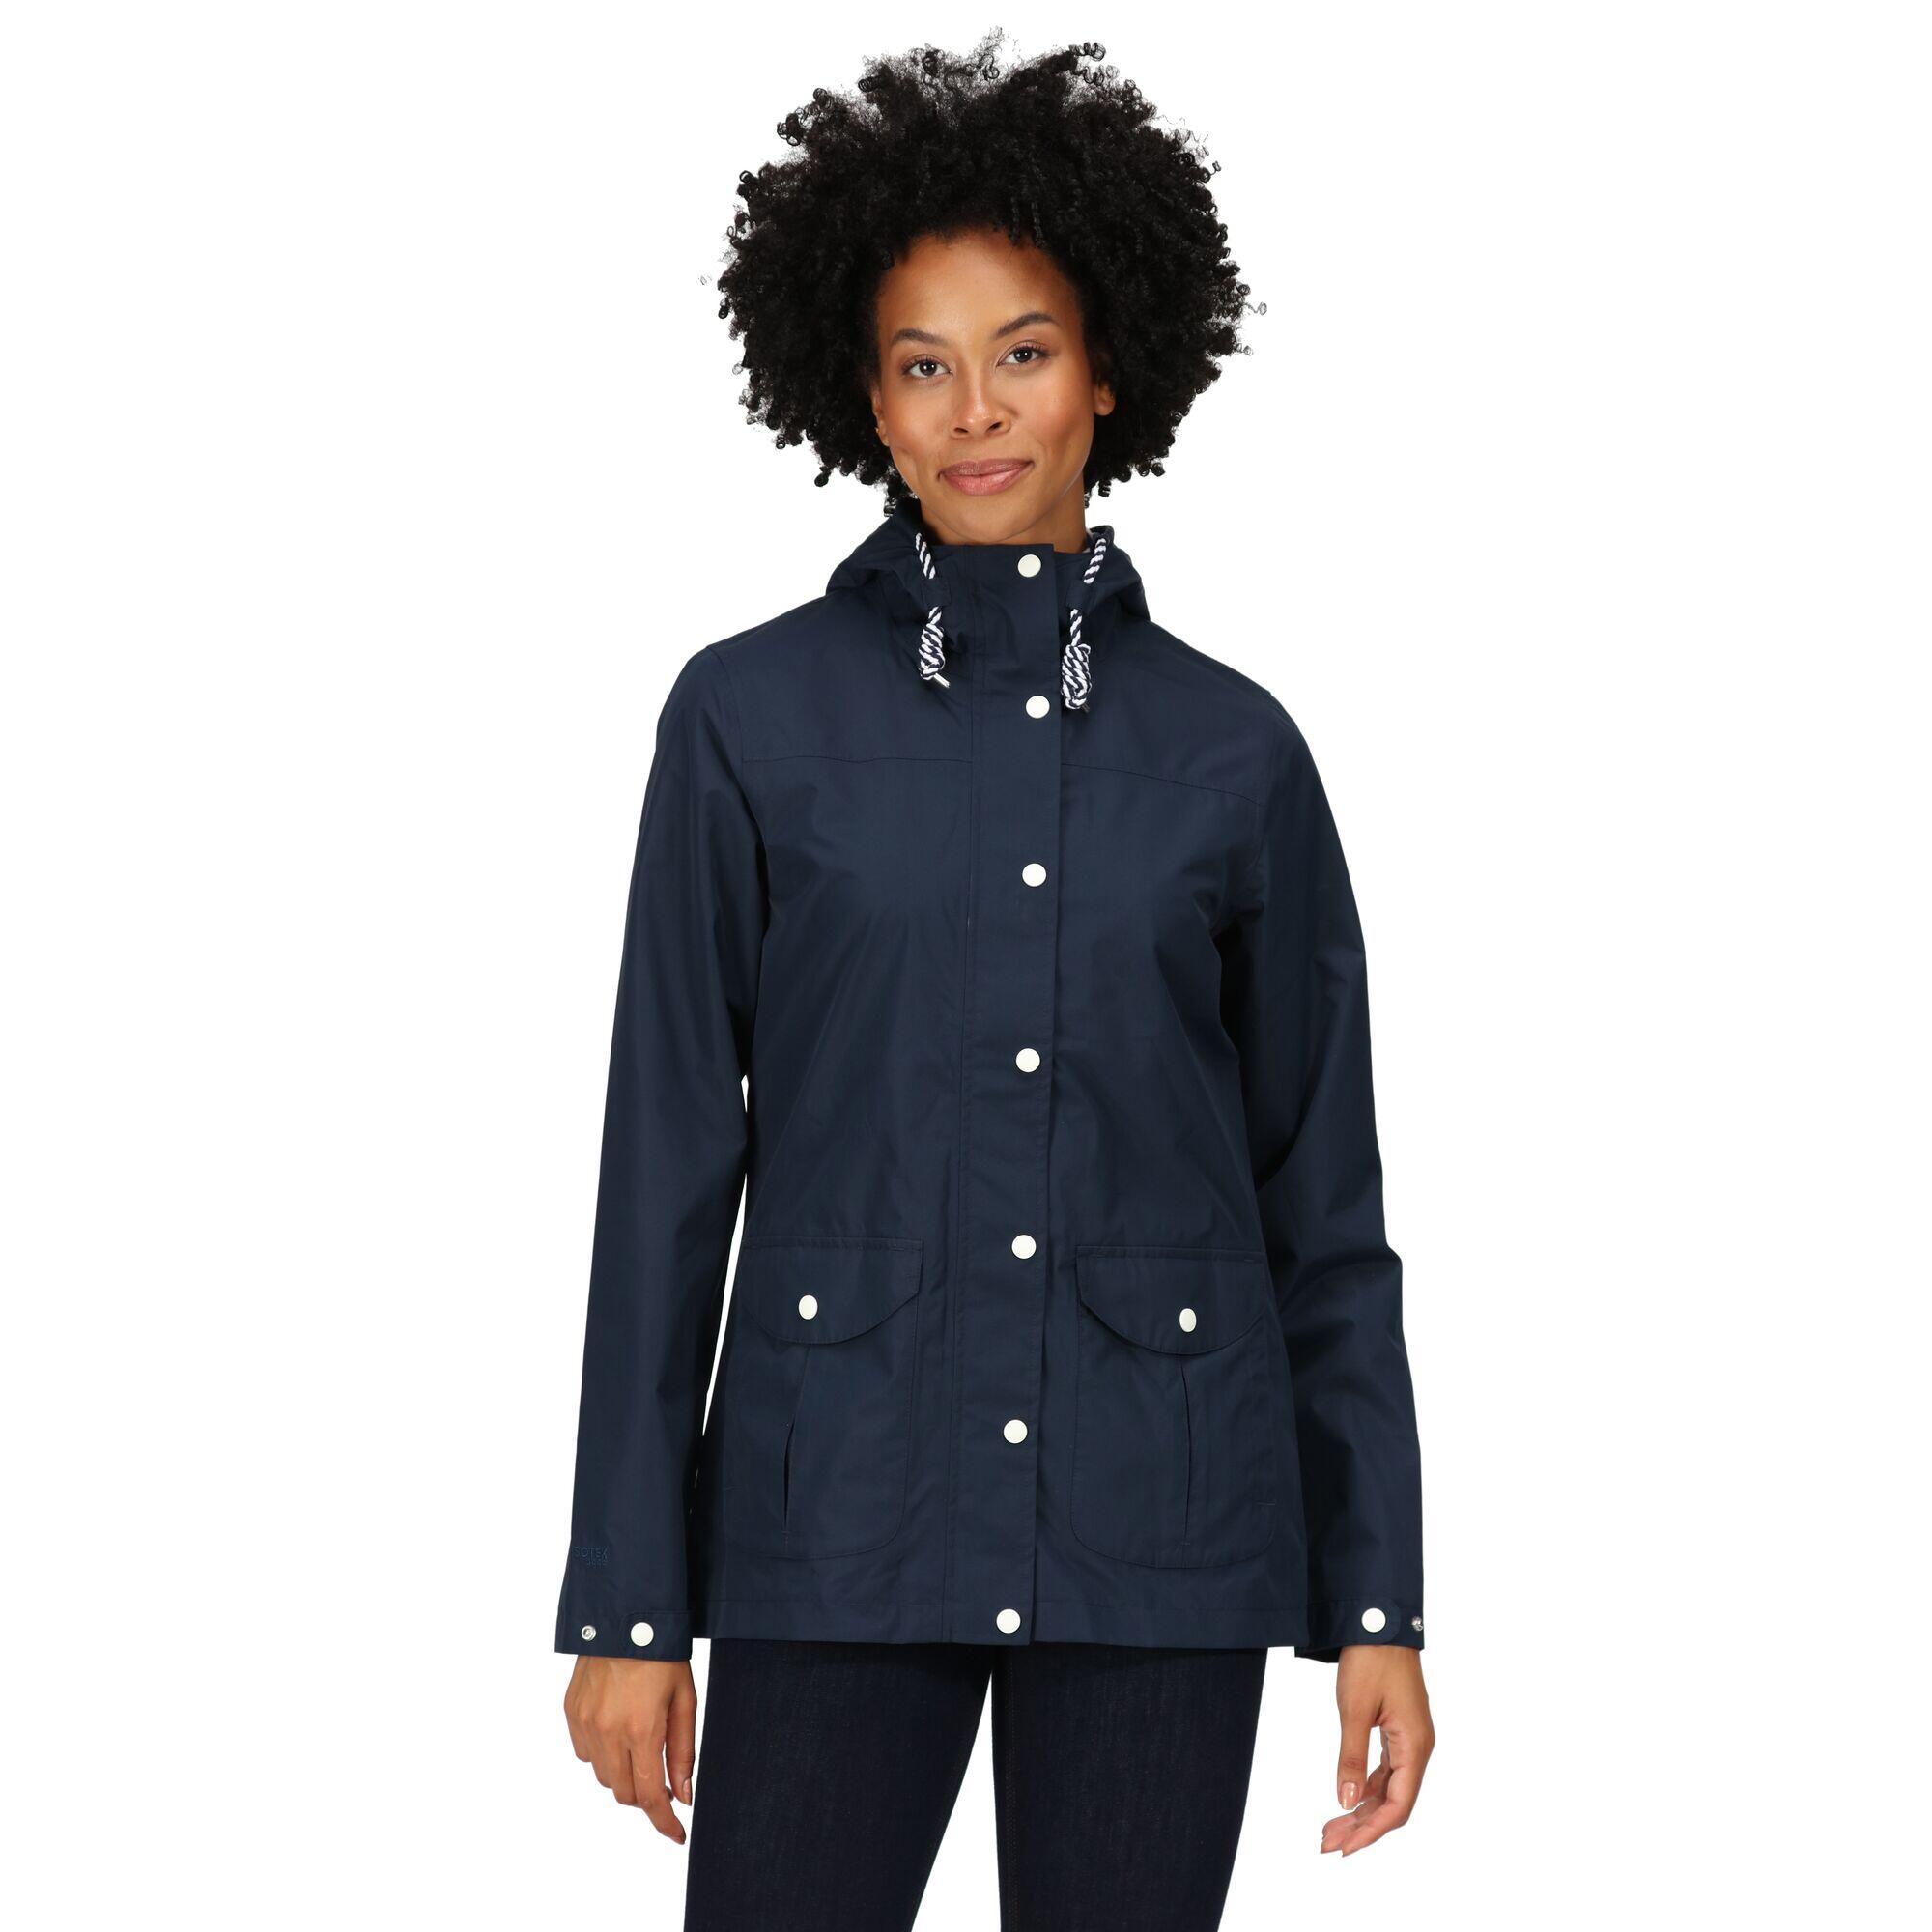 REGATTA Bayarma Women's Walking Cotton Jacket - Navy